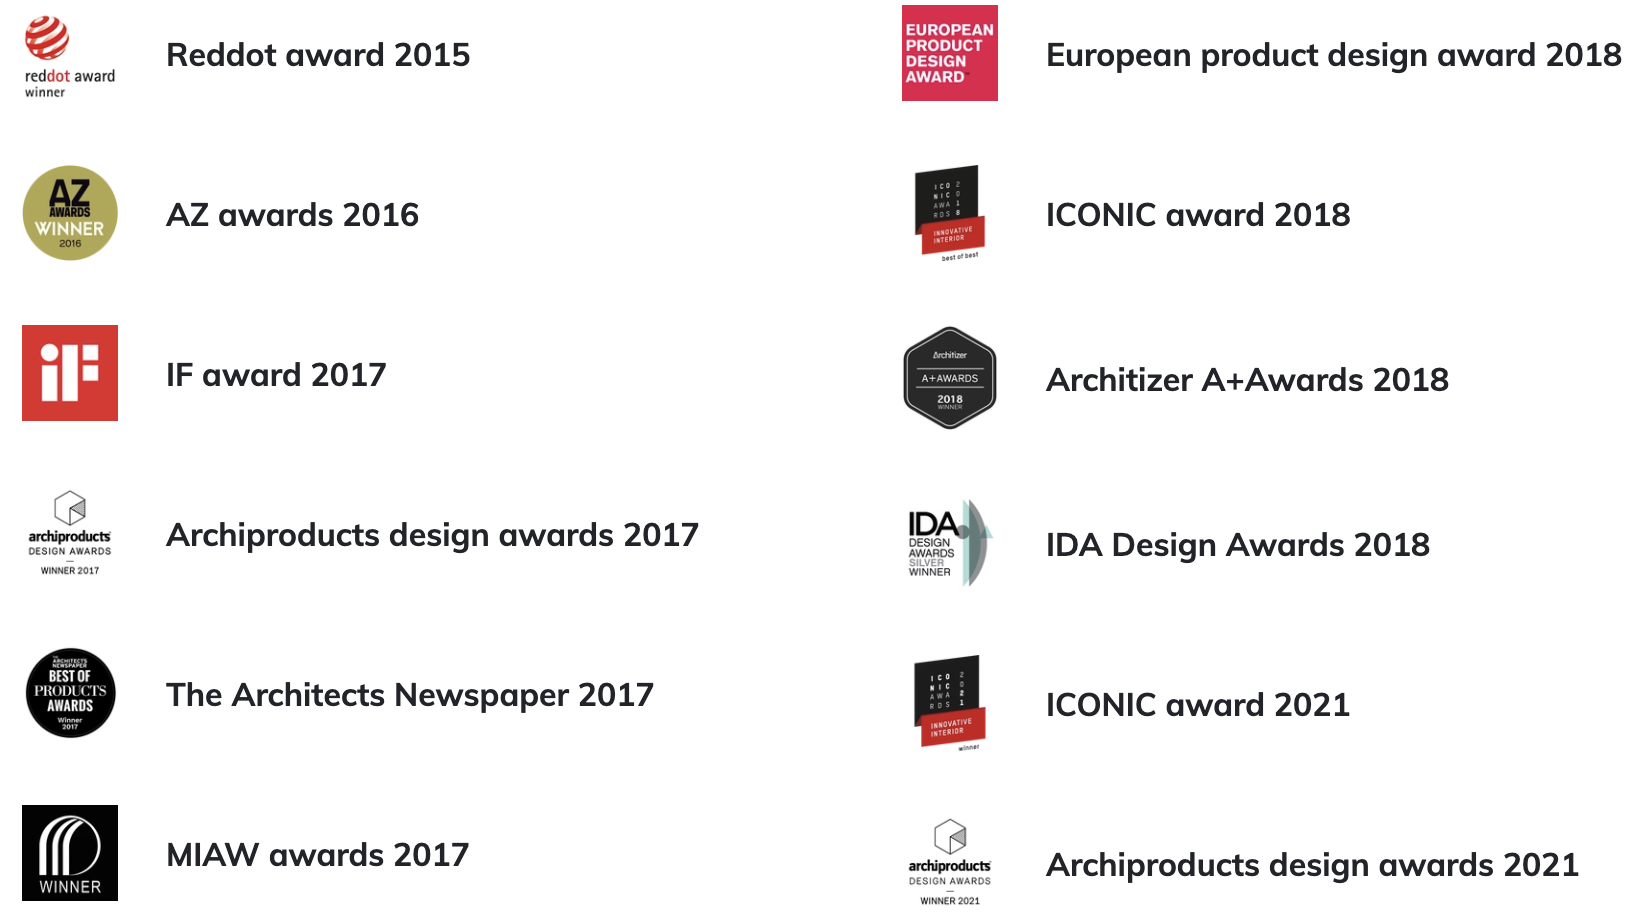 Portapivot international awards